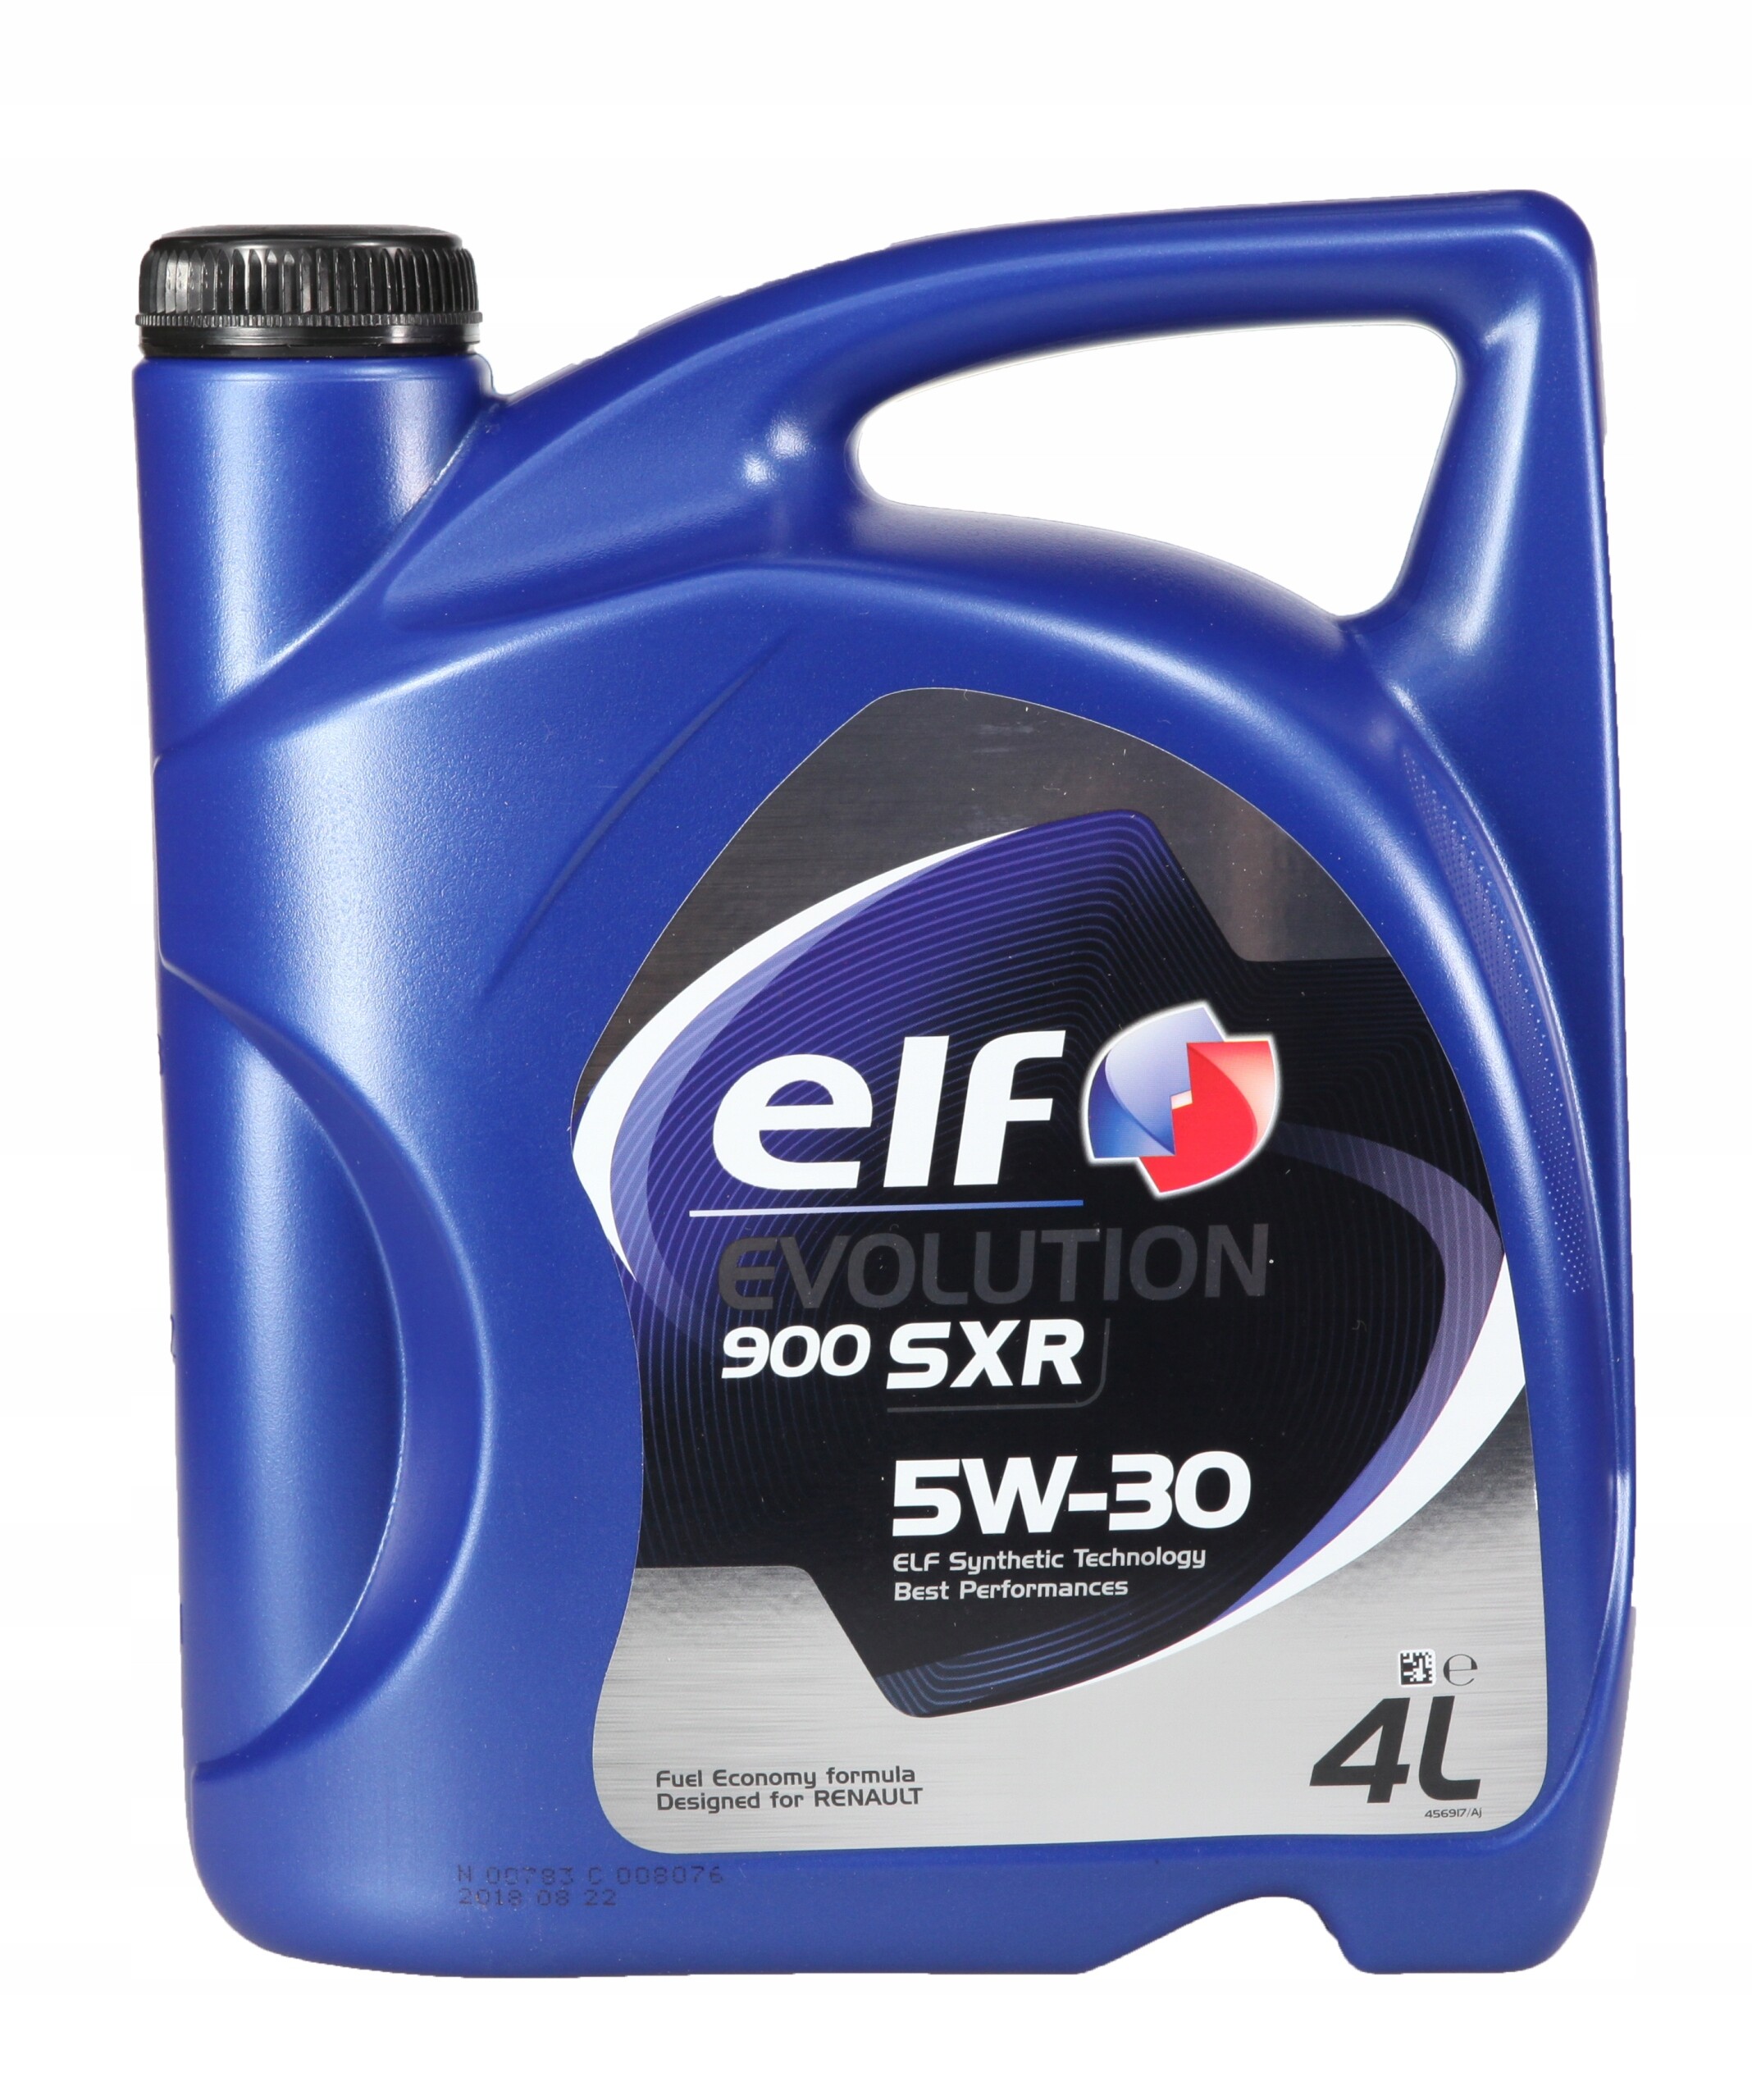  5w30 elf evolution sxr: Купить моторное масло Elf Evolution 900 .